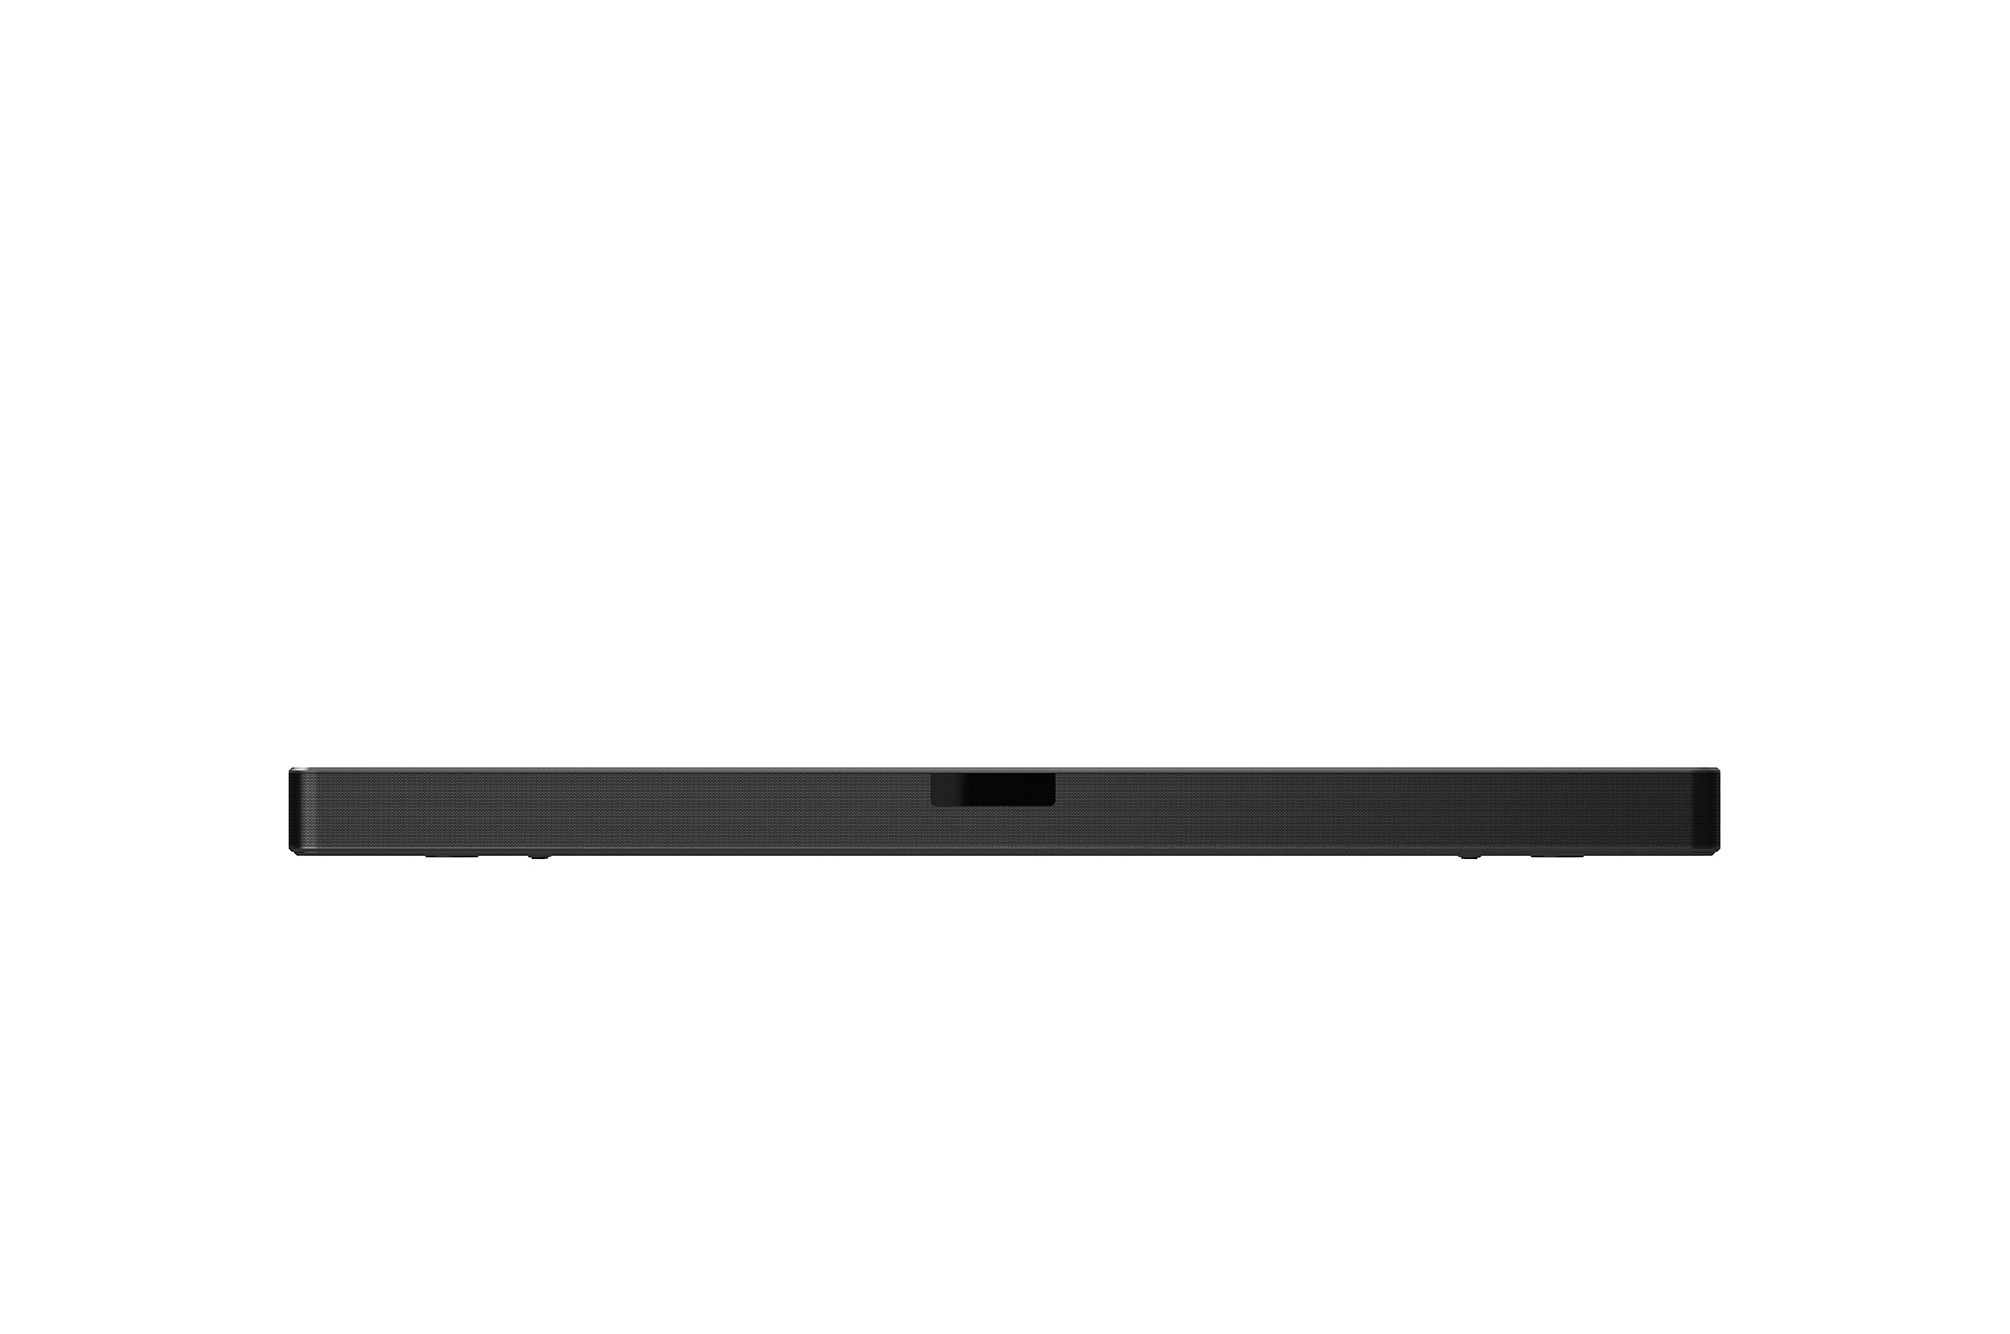 LG SN5.DEUSLLK altoparlante soundbar Nero 2.1 canali 400 W [SN5.DEUSLLK]